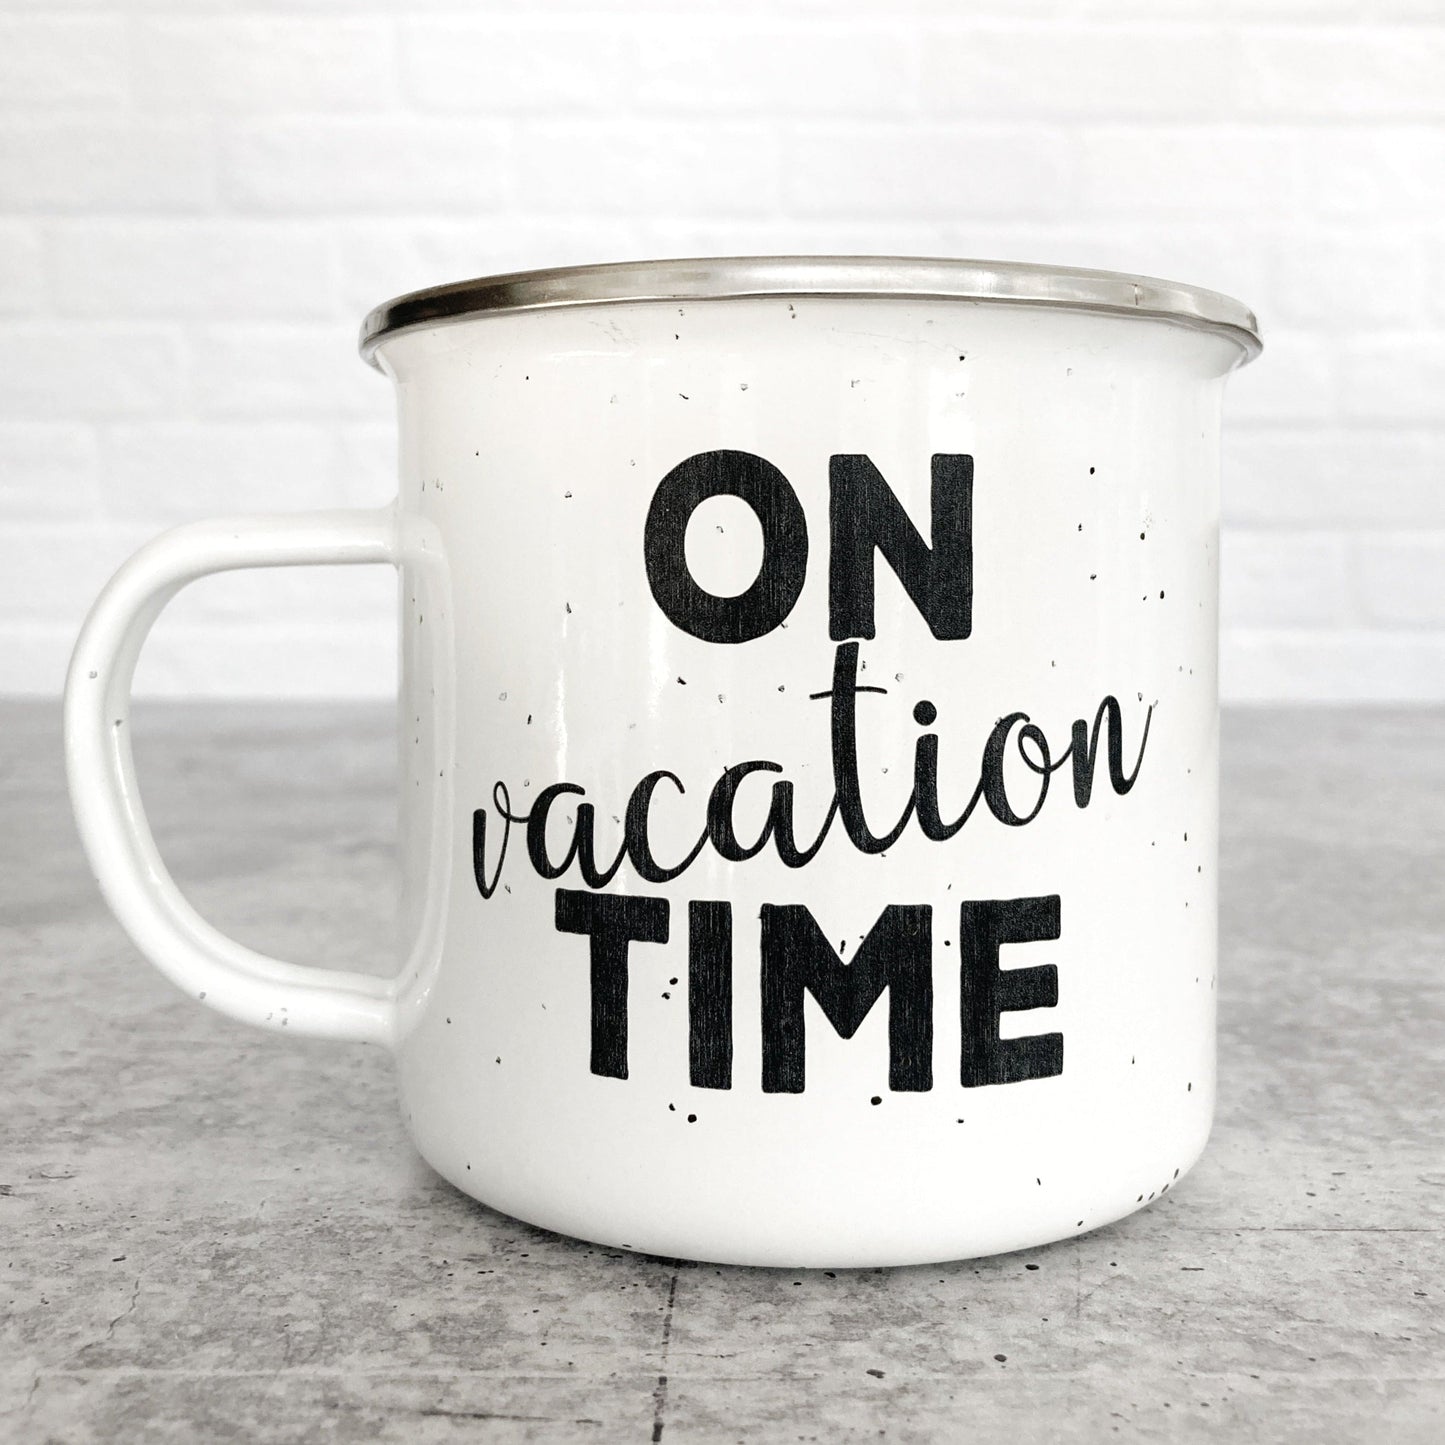 On Vacation time design on a white enamel mug